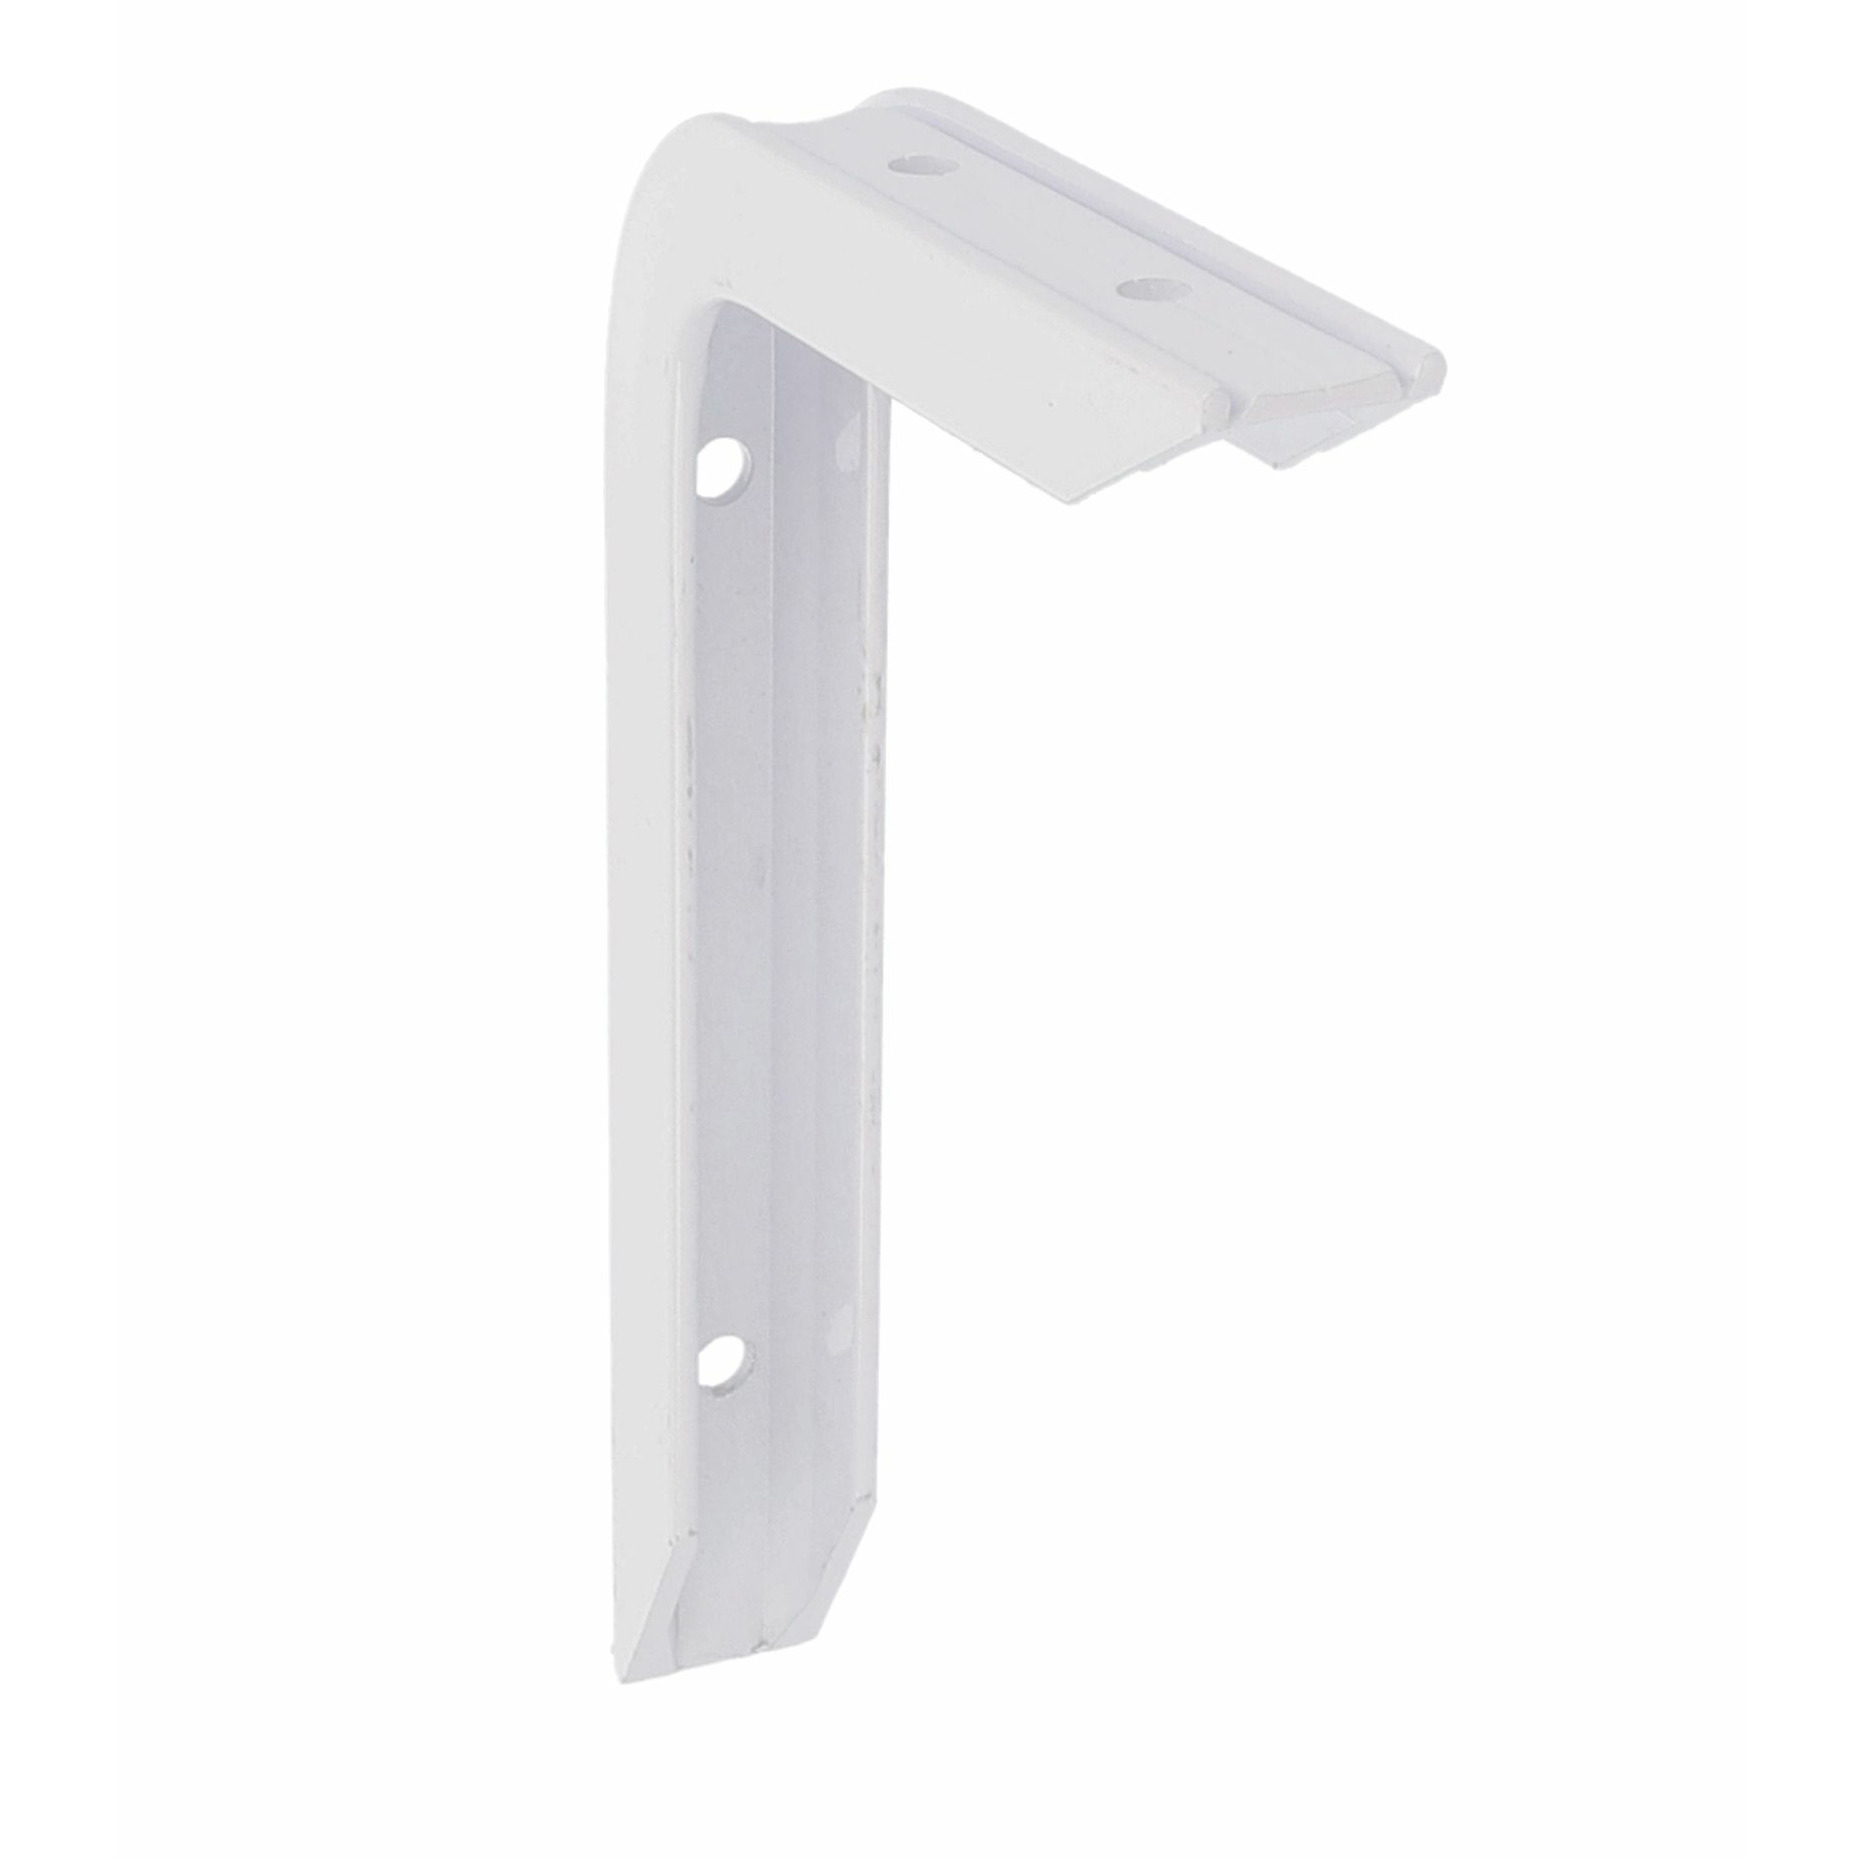 AMIG Plankdrager-planksteun van aluminium gelakt wit H150 x B100 mm heavy support